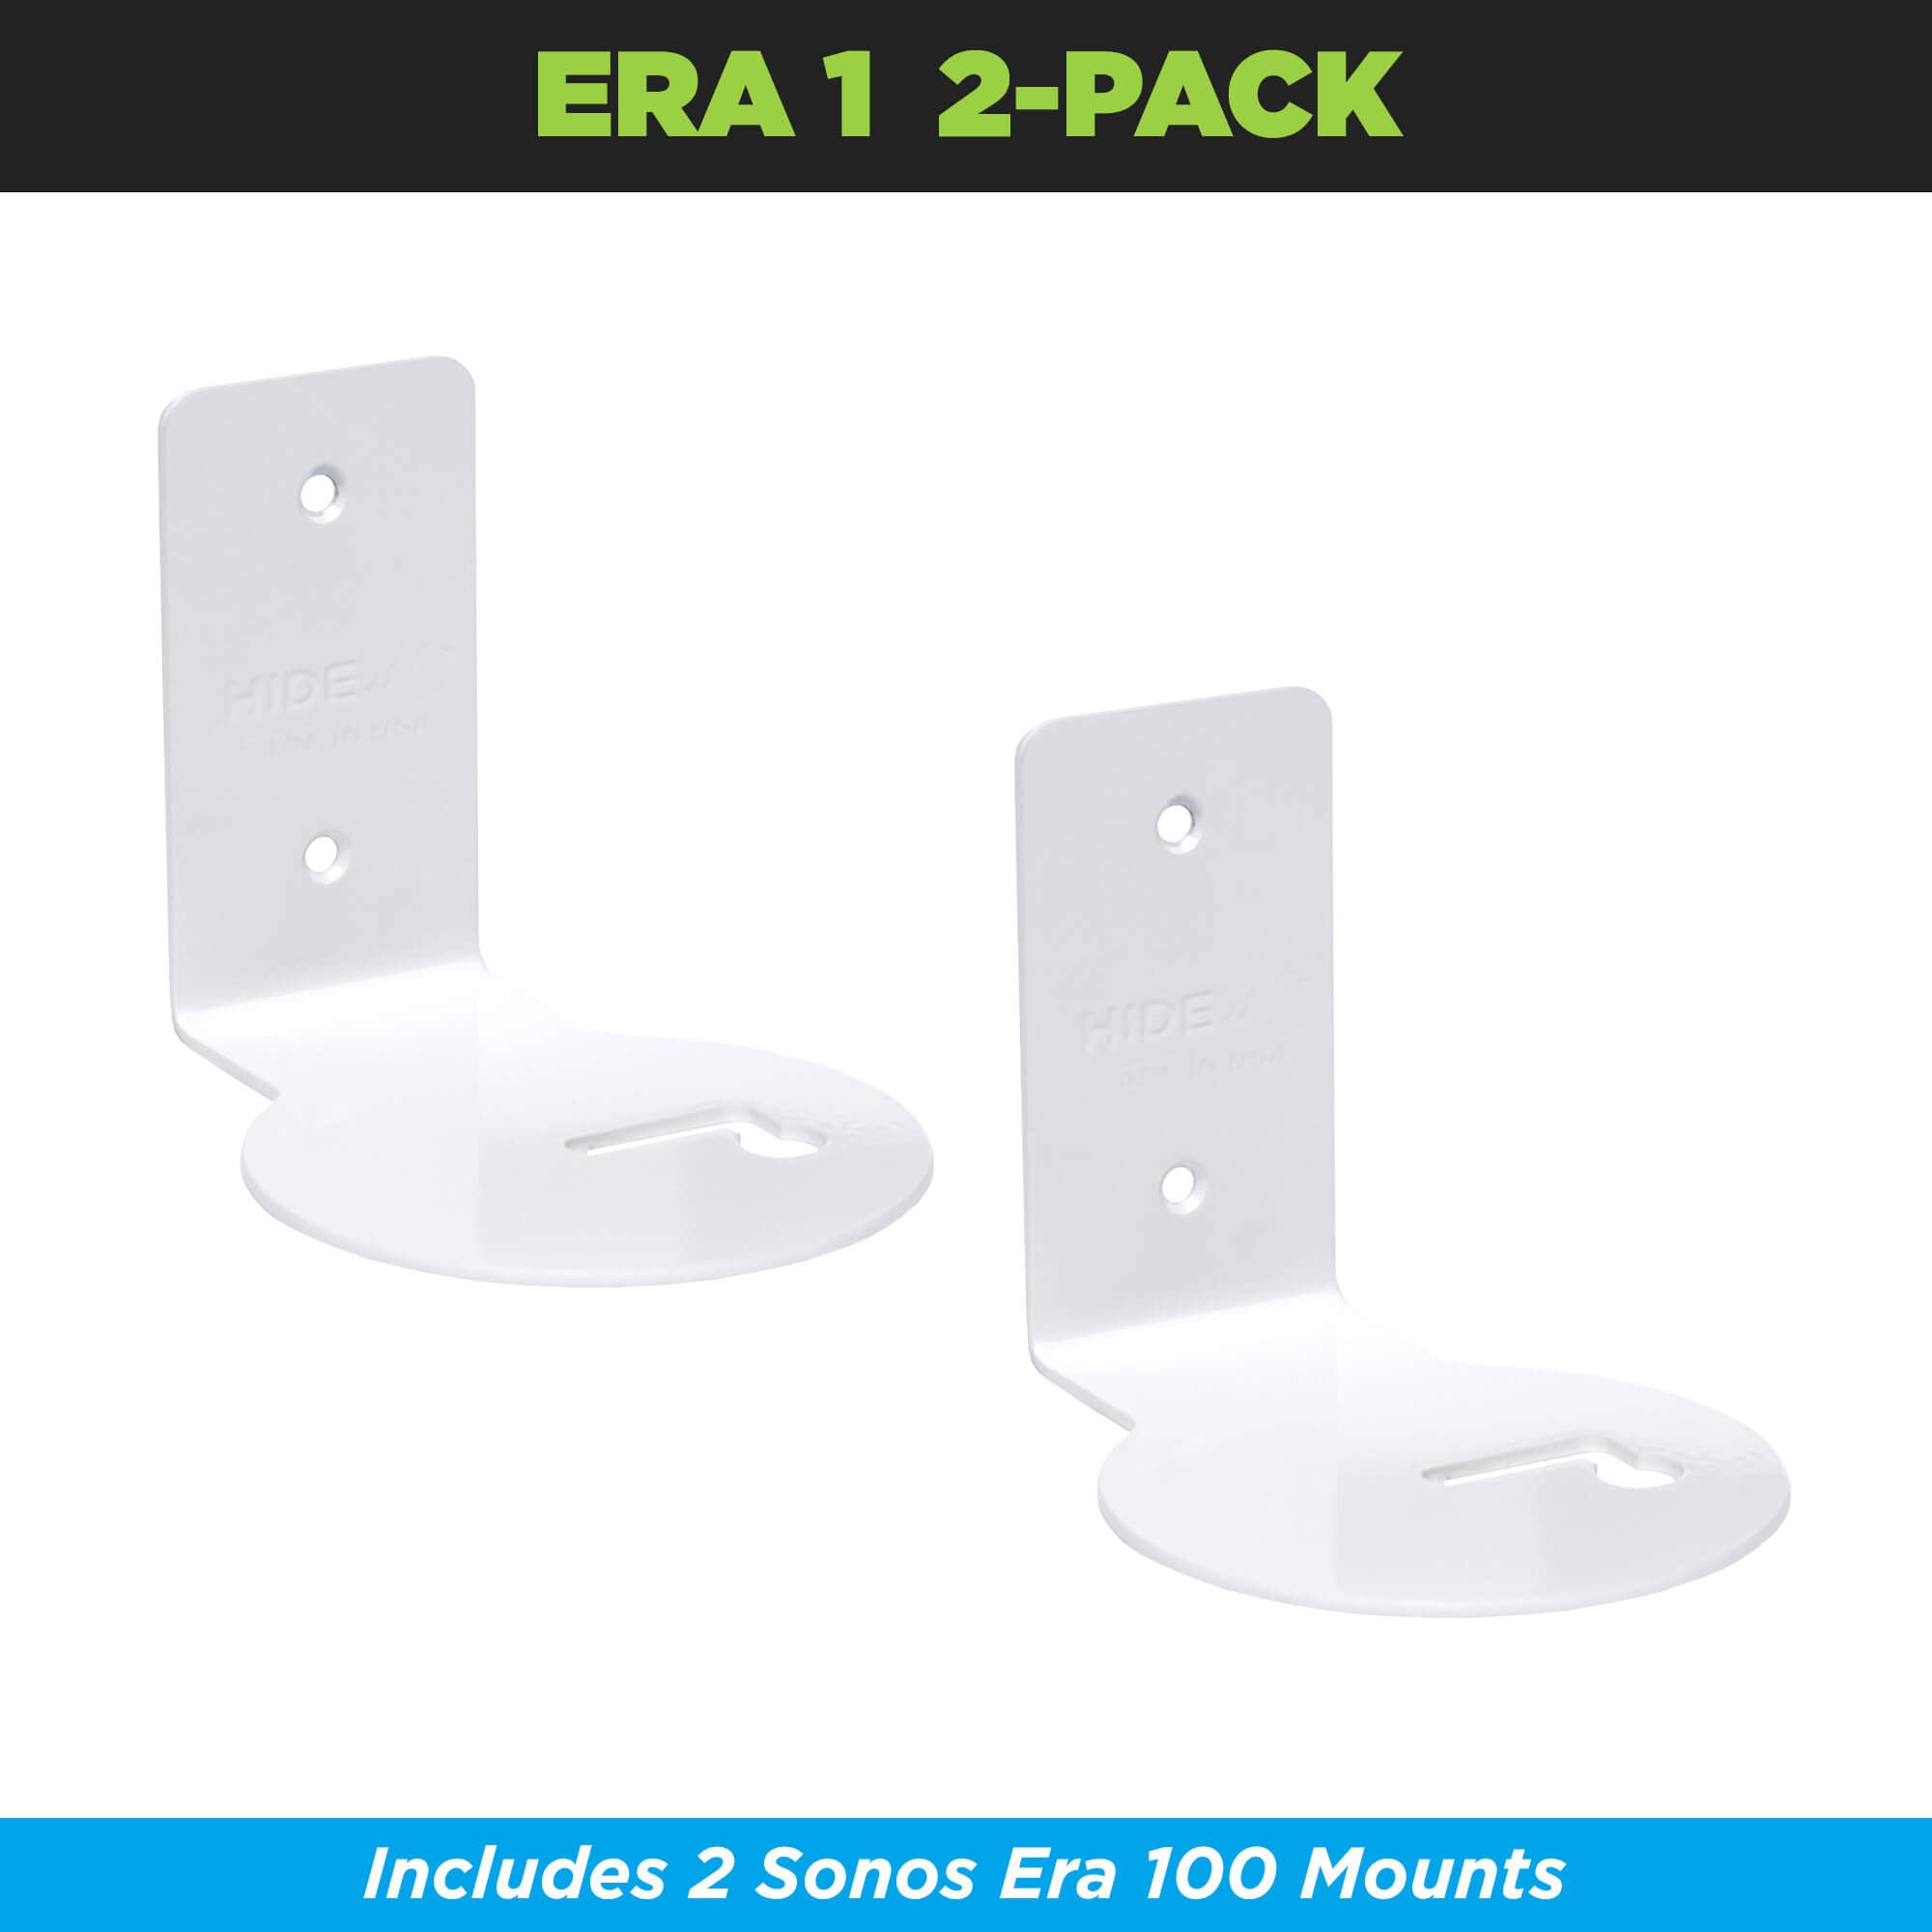 HIDEit Era 1 Wall Mount 2-pack includes two Sonos Era 100 wall mounts.